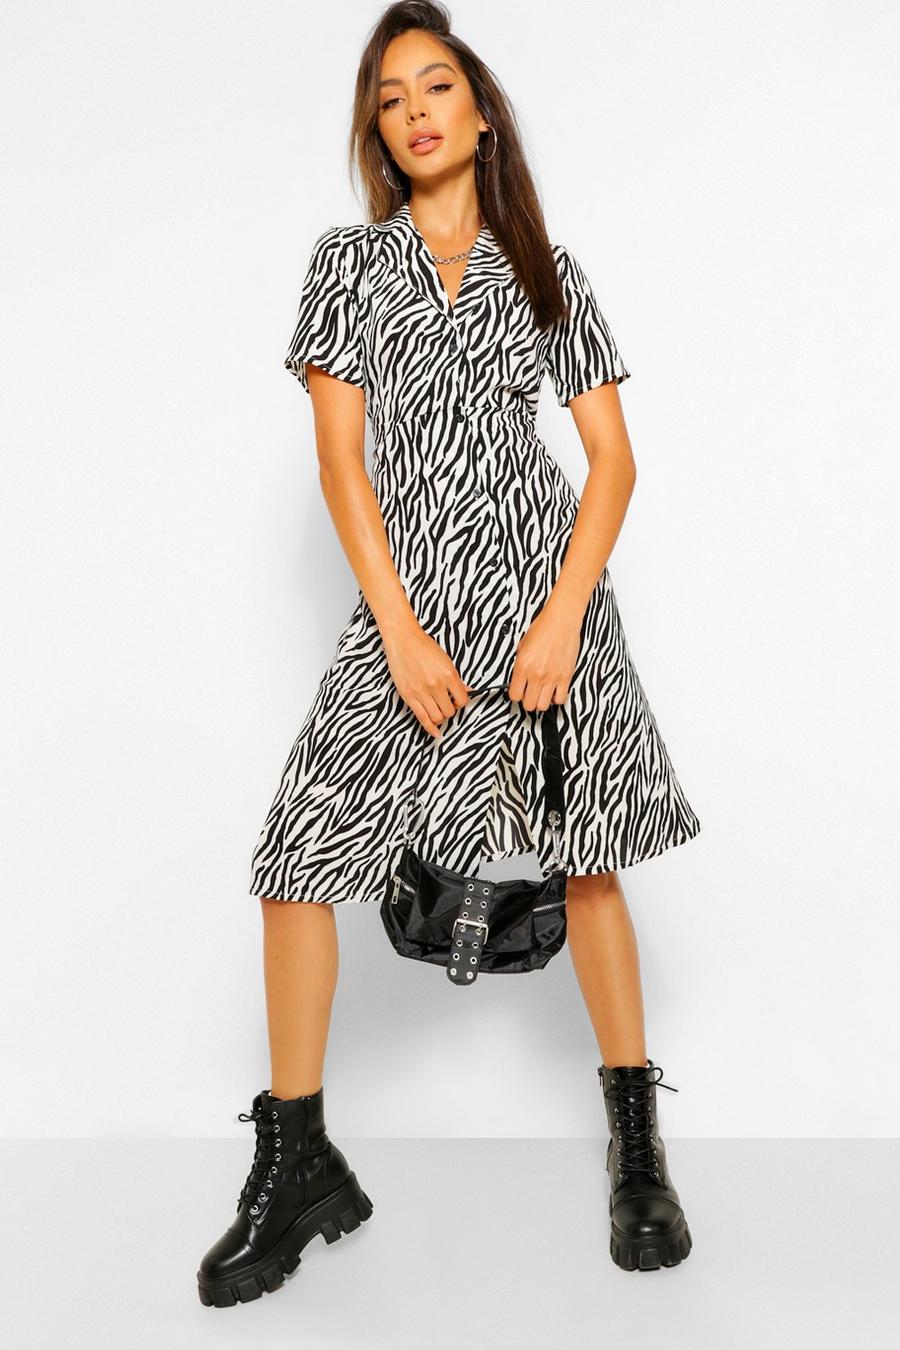 Black Zebra Print Shirt Style Midi Dress